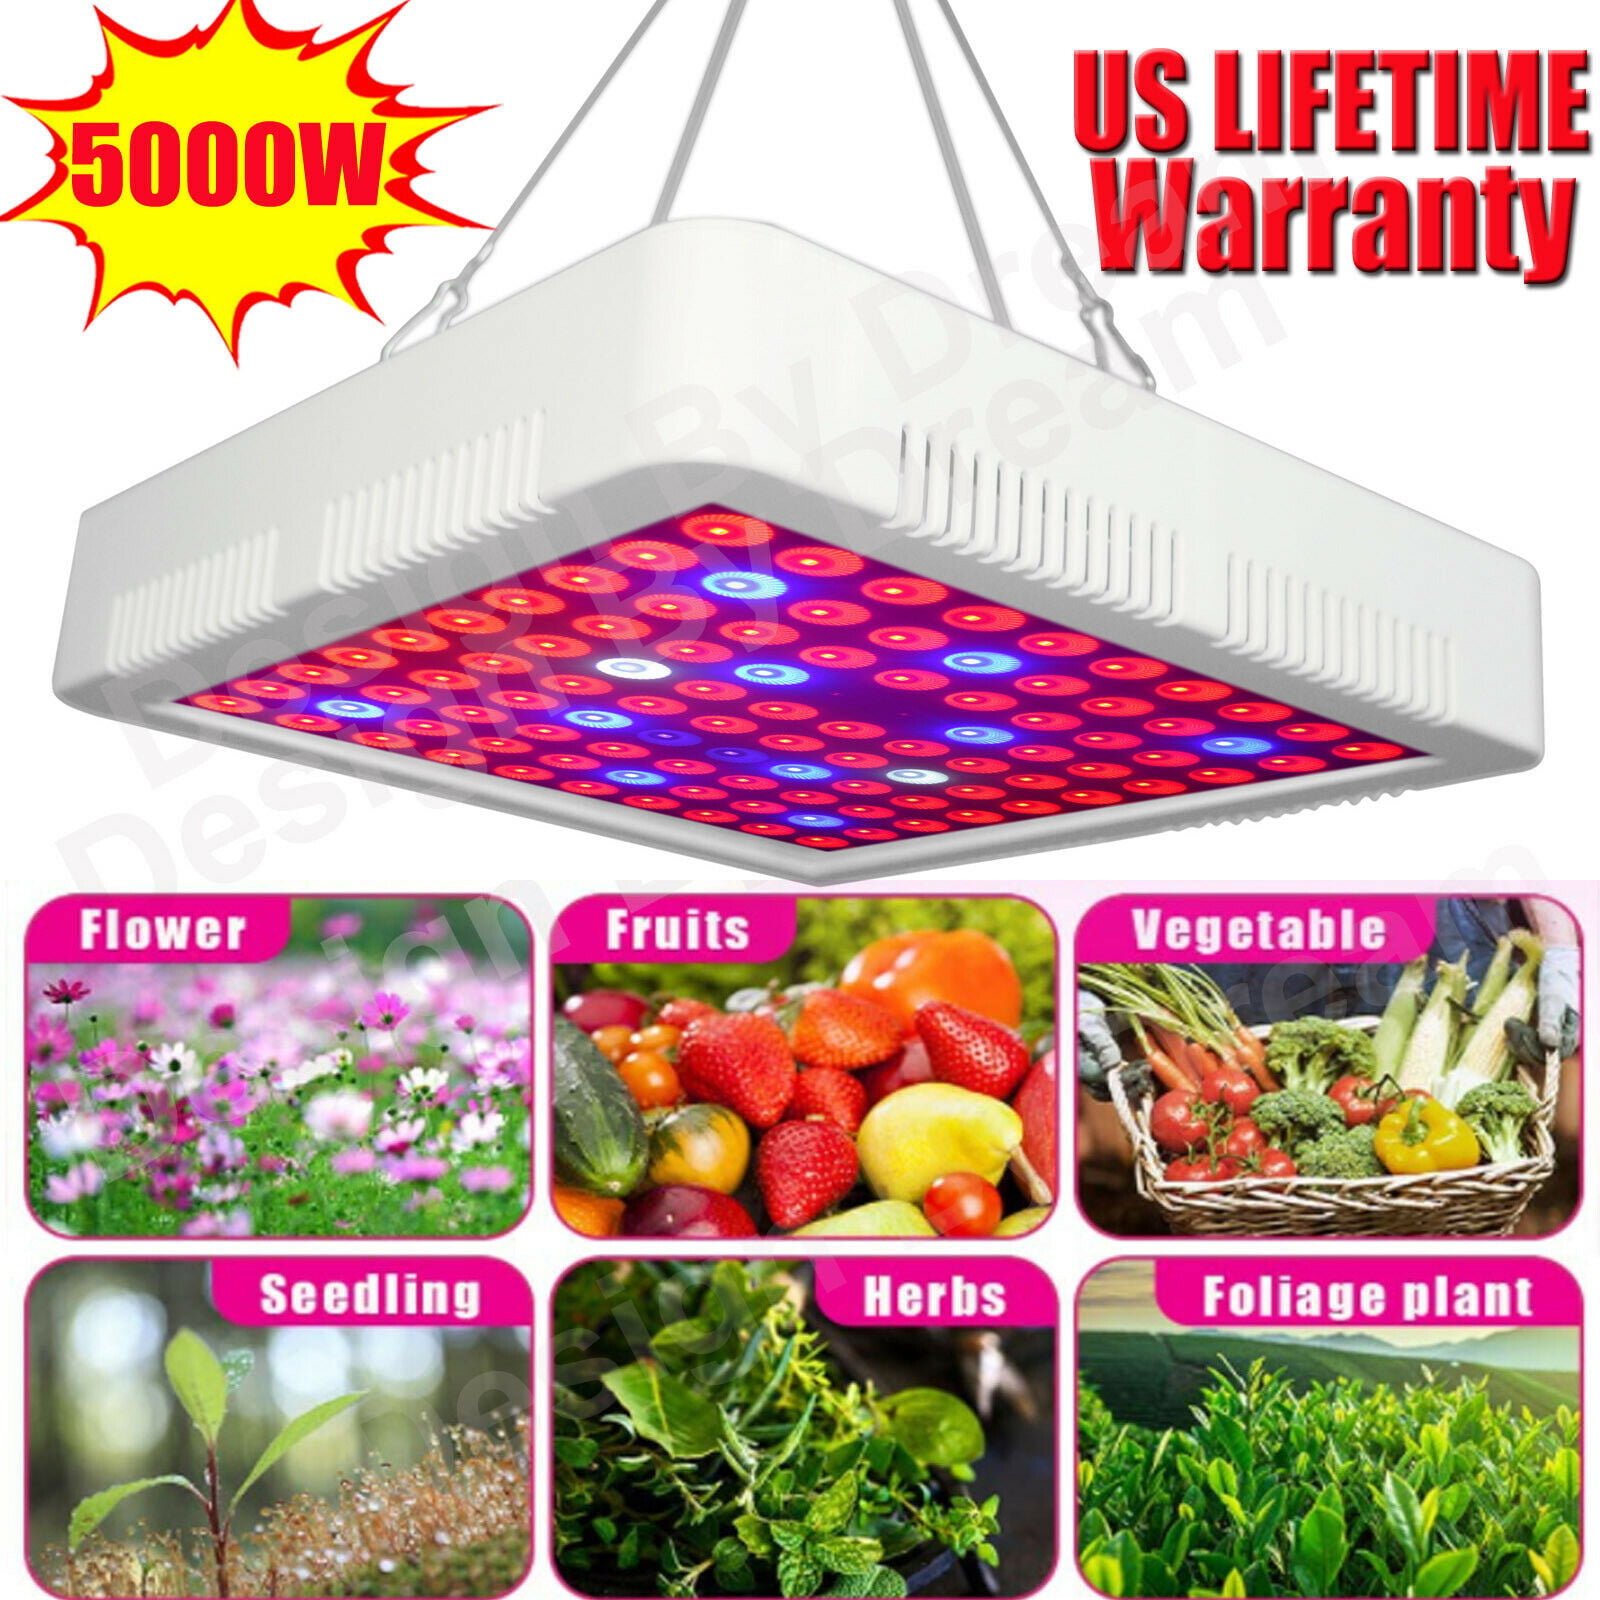 Details about   VANDER 2000W 2500W 3000W LED Grow Light Full Spectrum for Indoor Plant Flower 